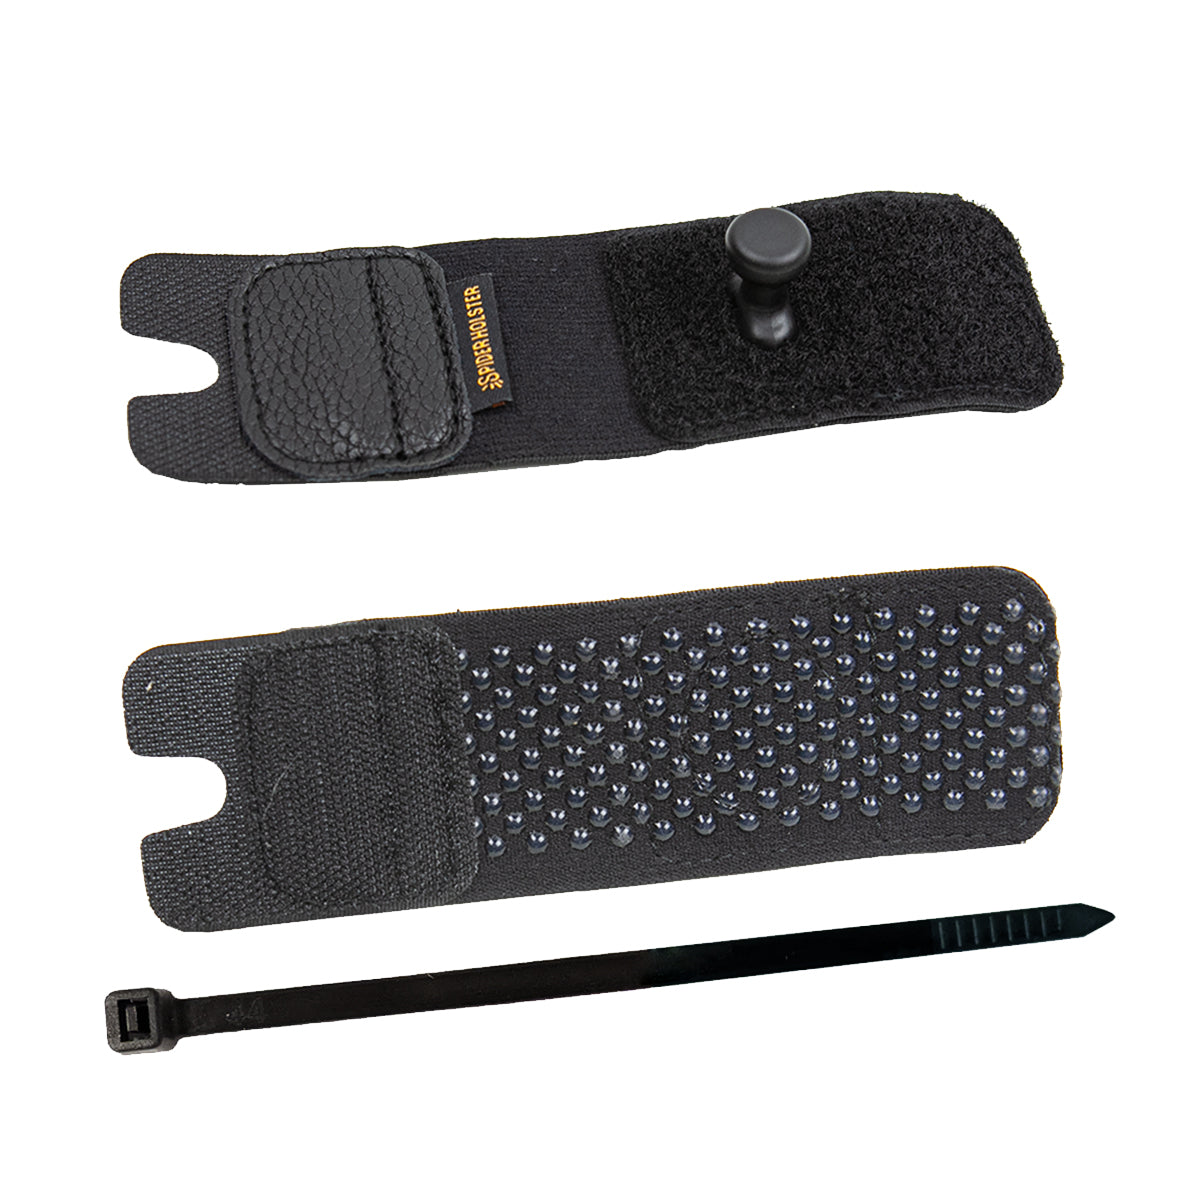 5510TH: Tool Grip - Elastic Attachment Strap